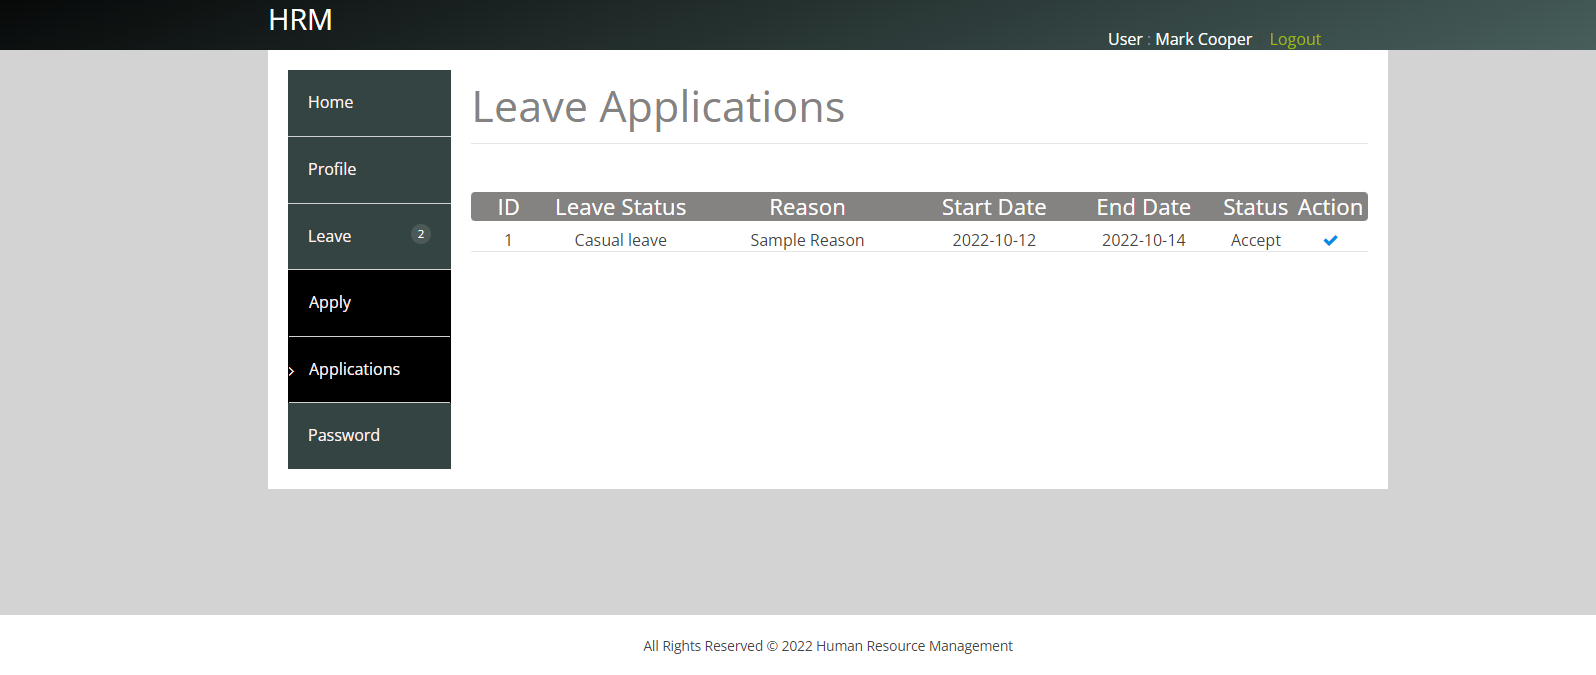 HRM - Leave Application